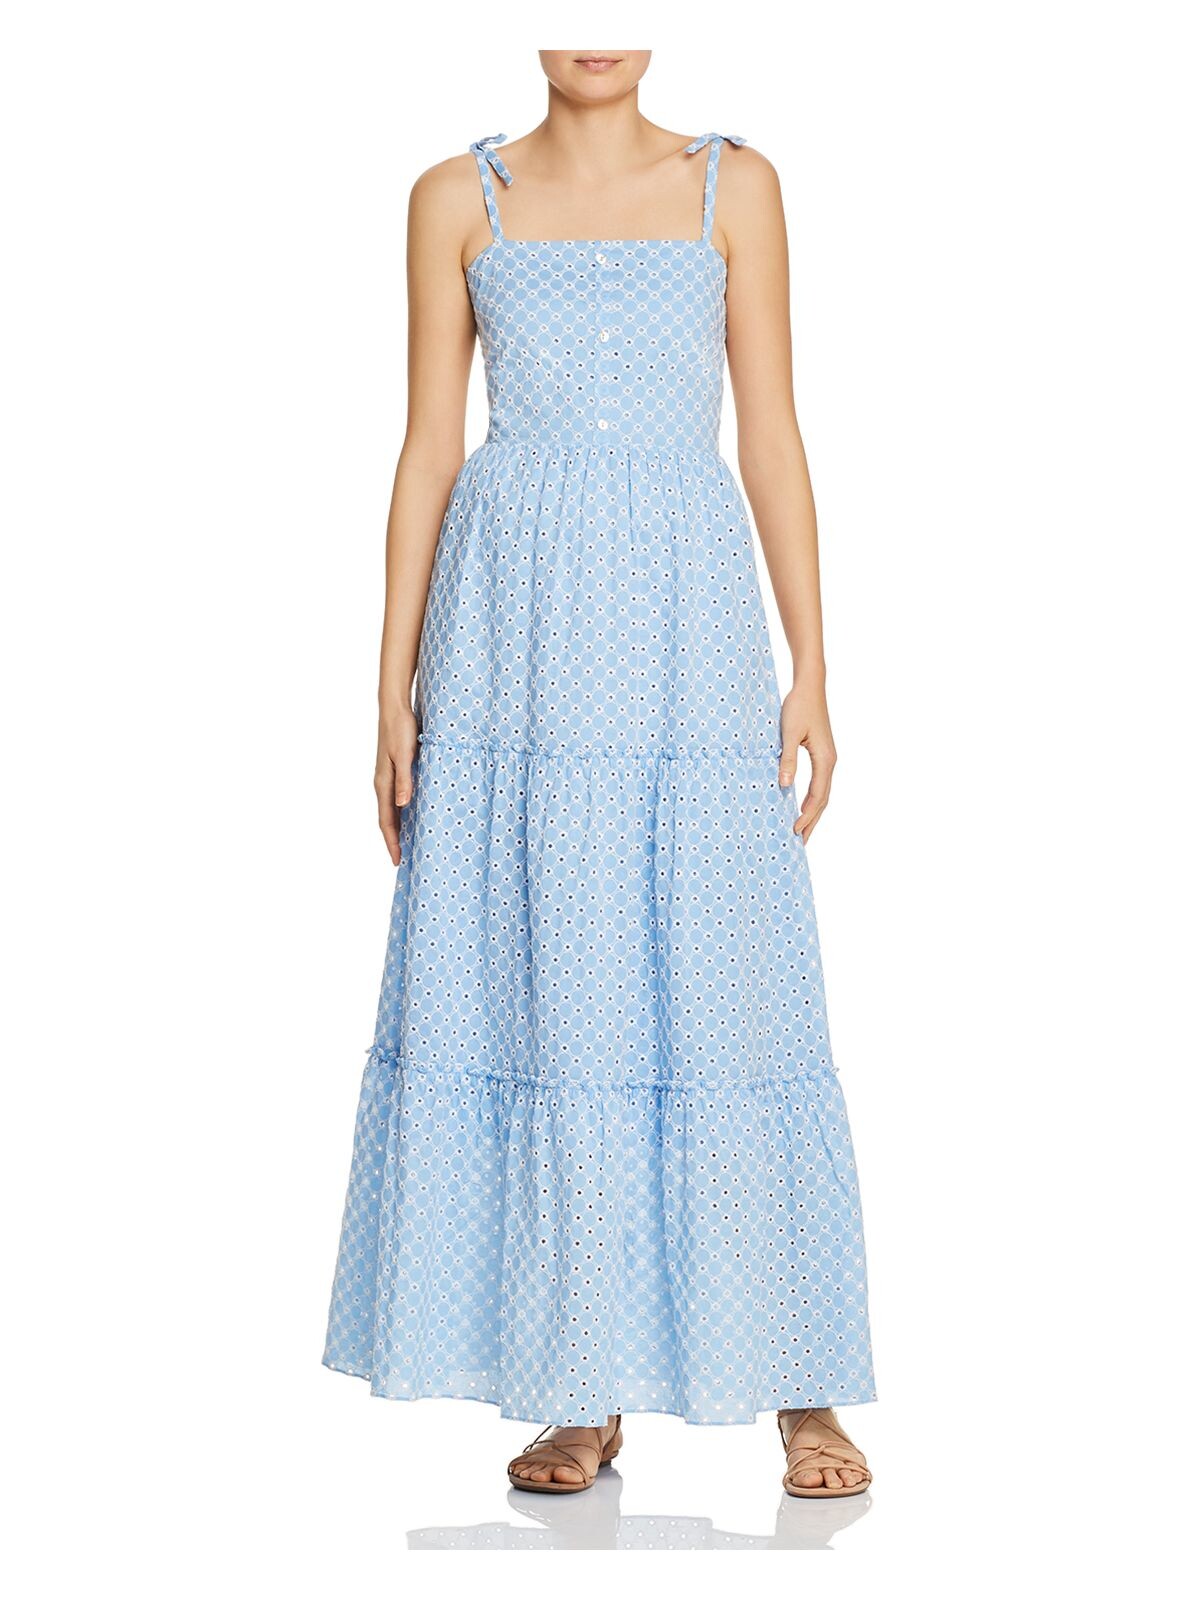 PALOMABLUE Womens Light Blue Spaghetti Strap Full-Length Ruffled Dress Size: L